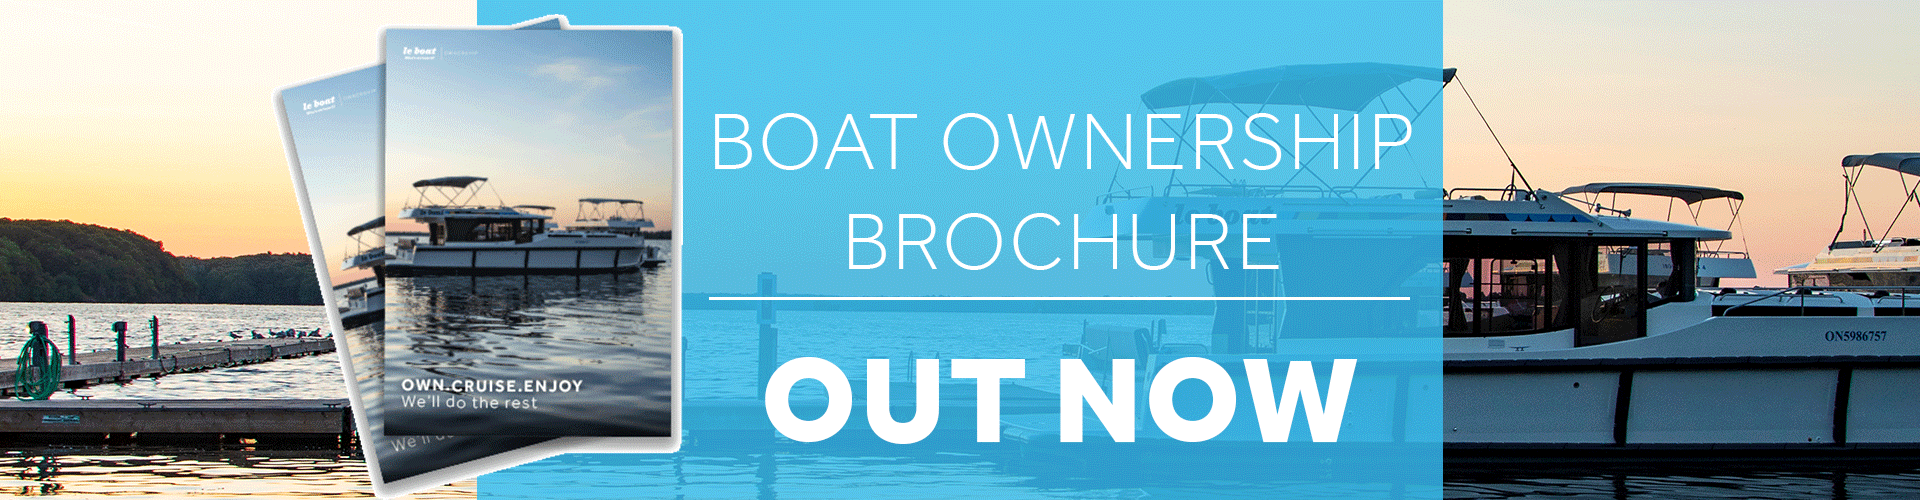 Le Boat - Boat Ownership Brochure